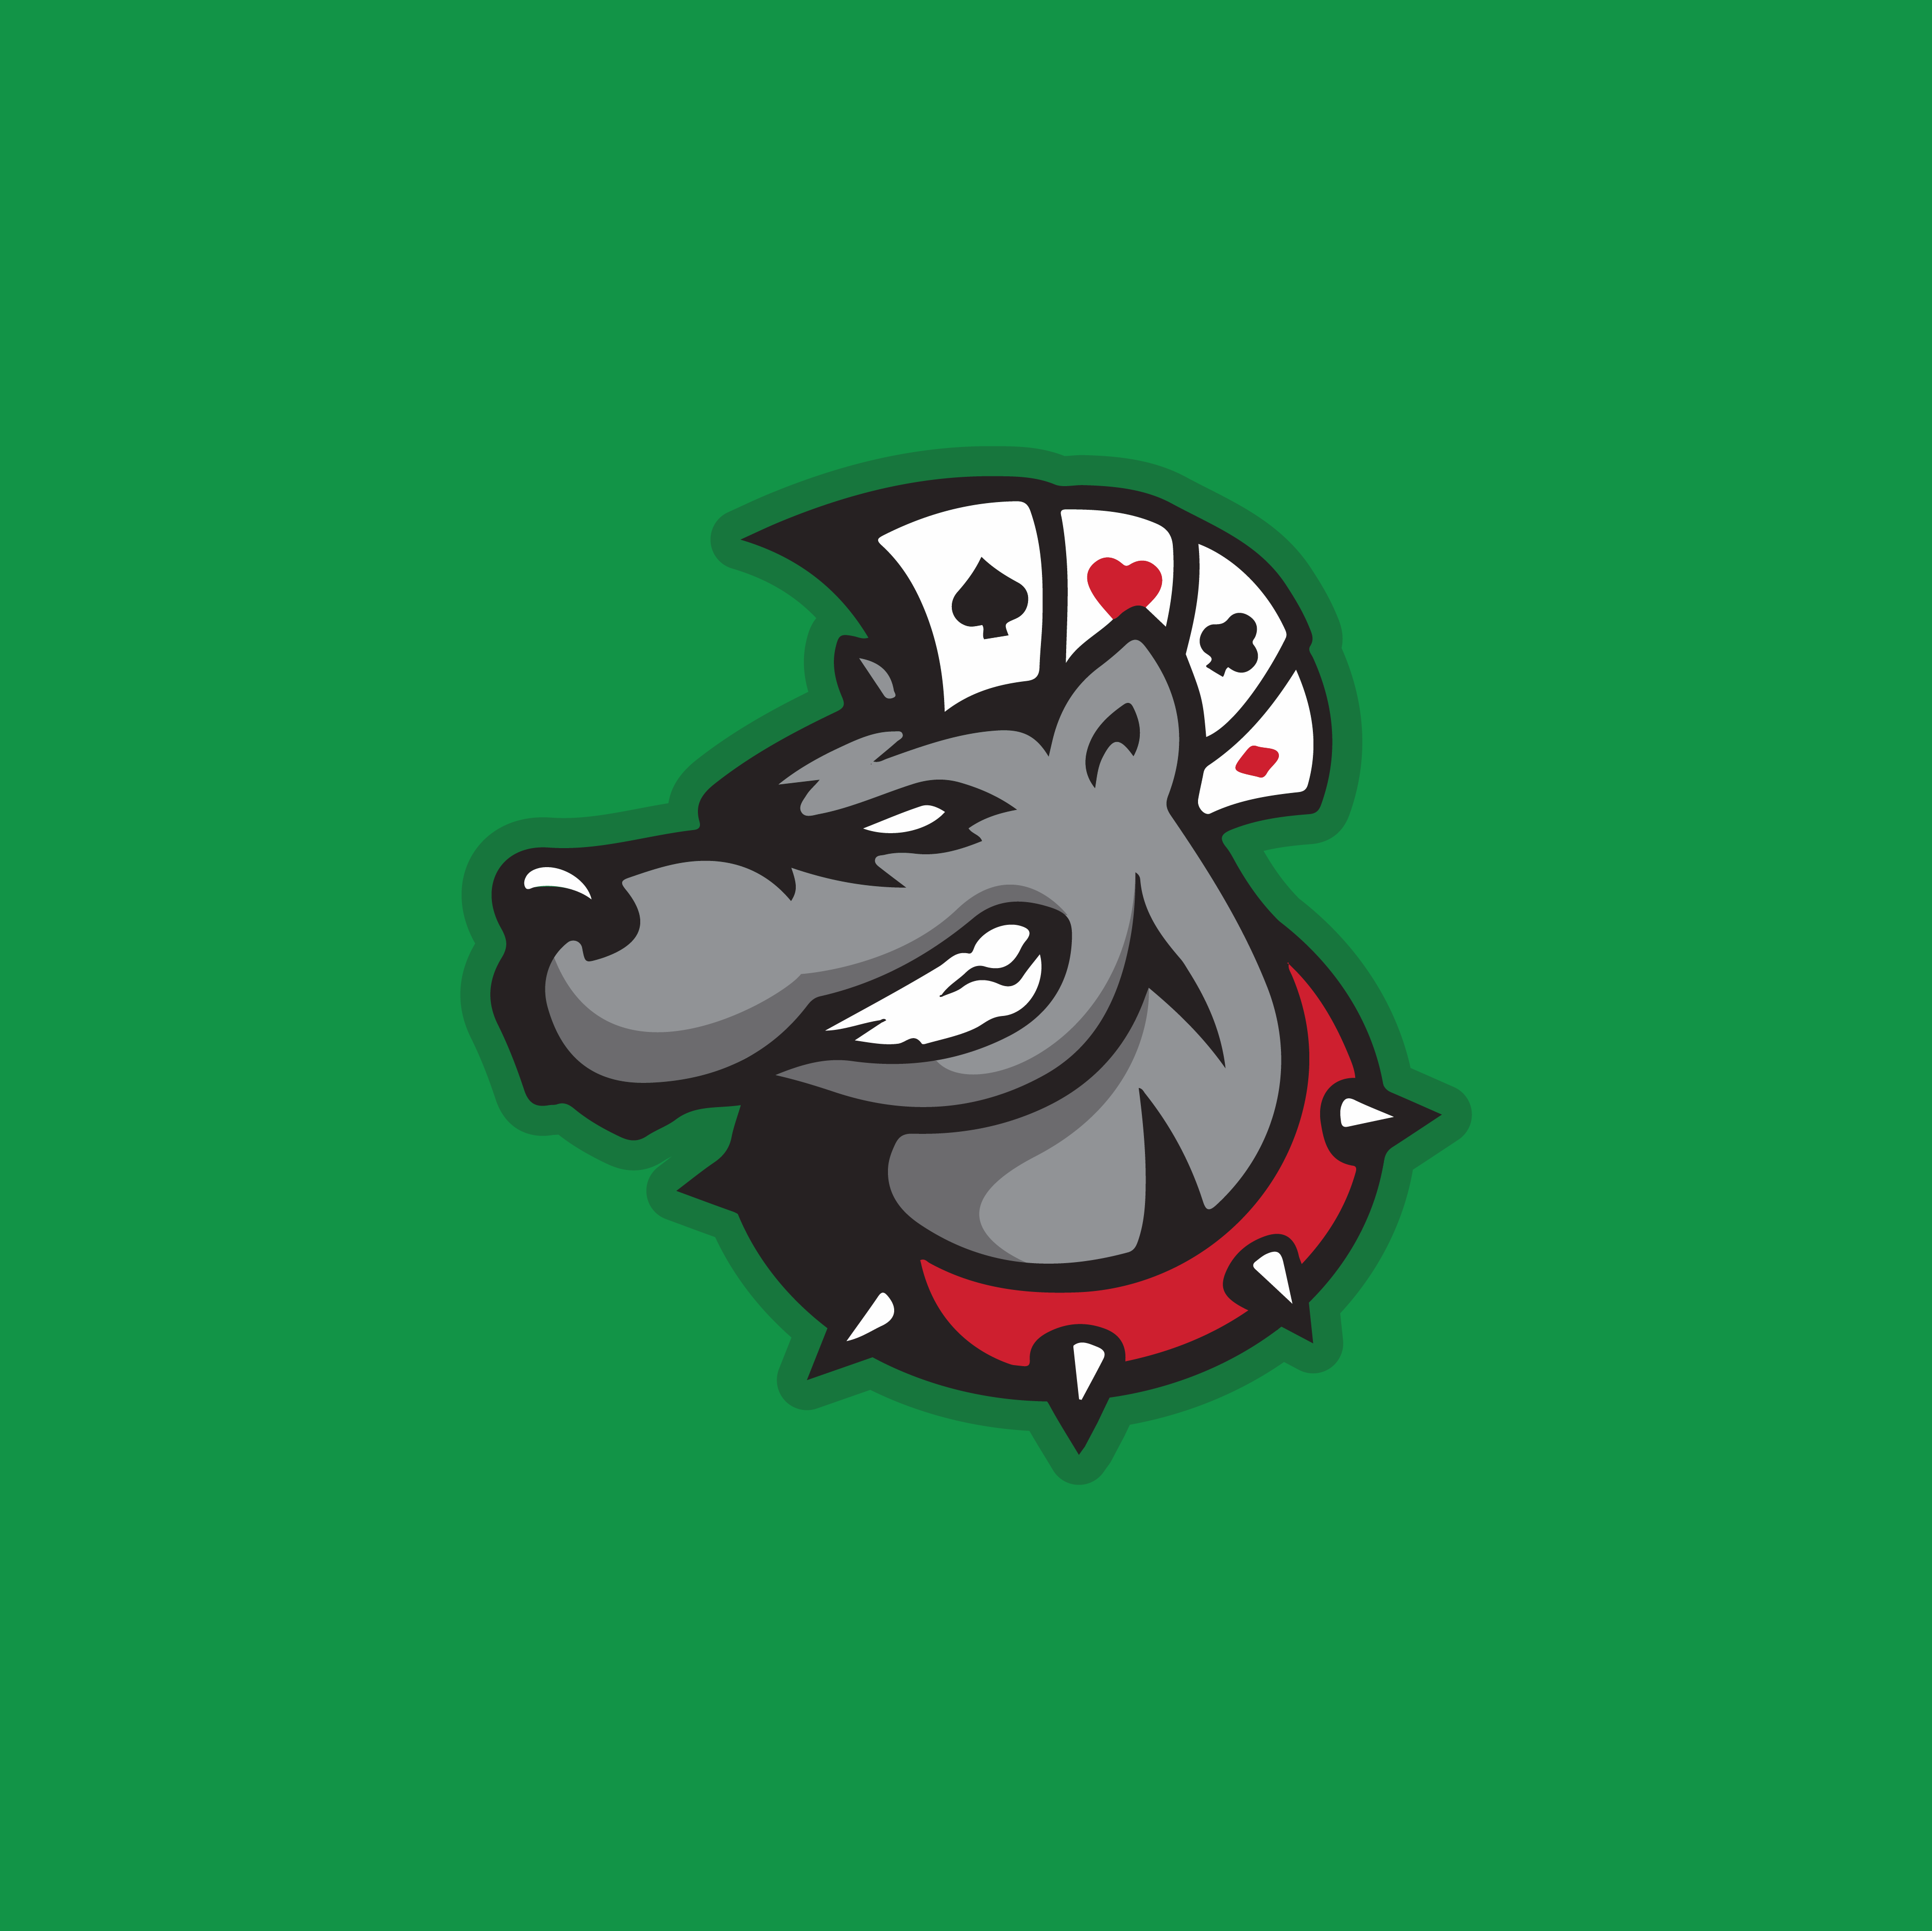 BigDog Poker logo design by logo designer Serve Studios for your inspiration and for the worlds largest logo competition